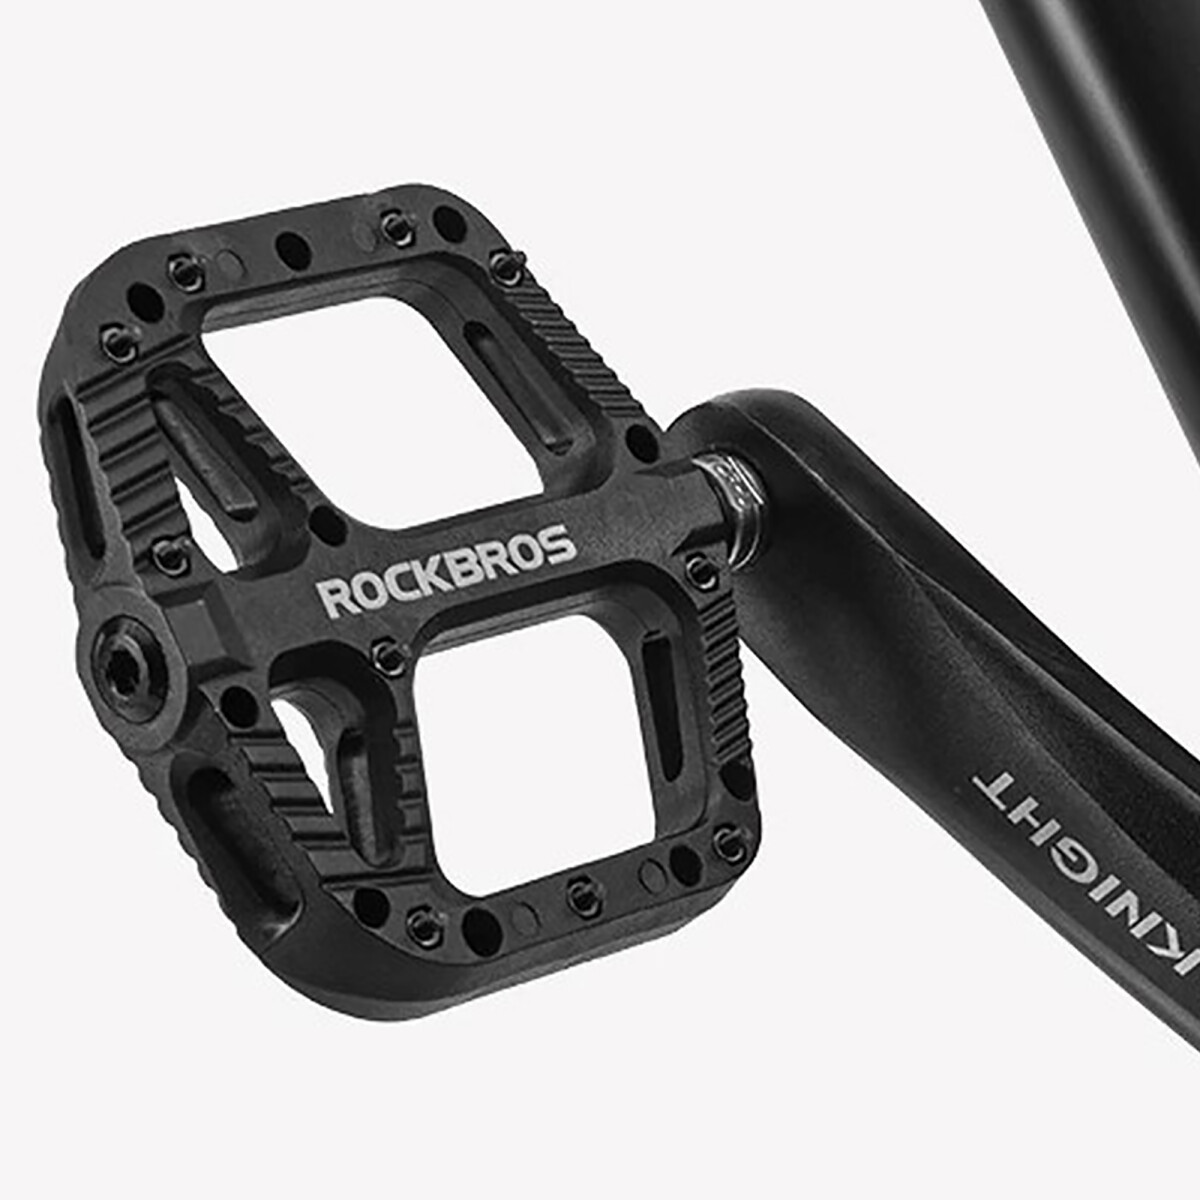 Rockbros - Pedales para Bicicleta 2021-12A - Clavos Antideslizantes. Plataforma Ancha Ergonómica. - 001 